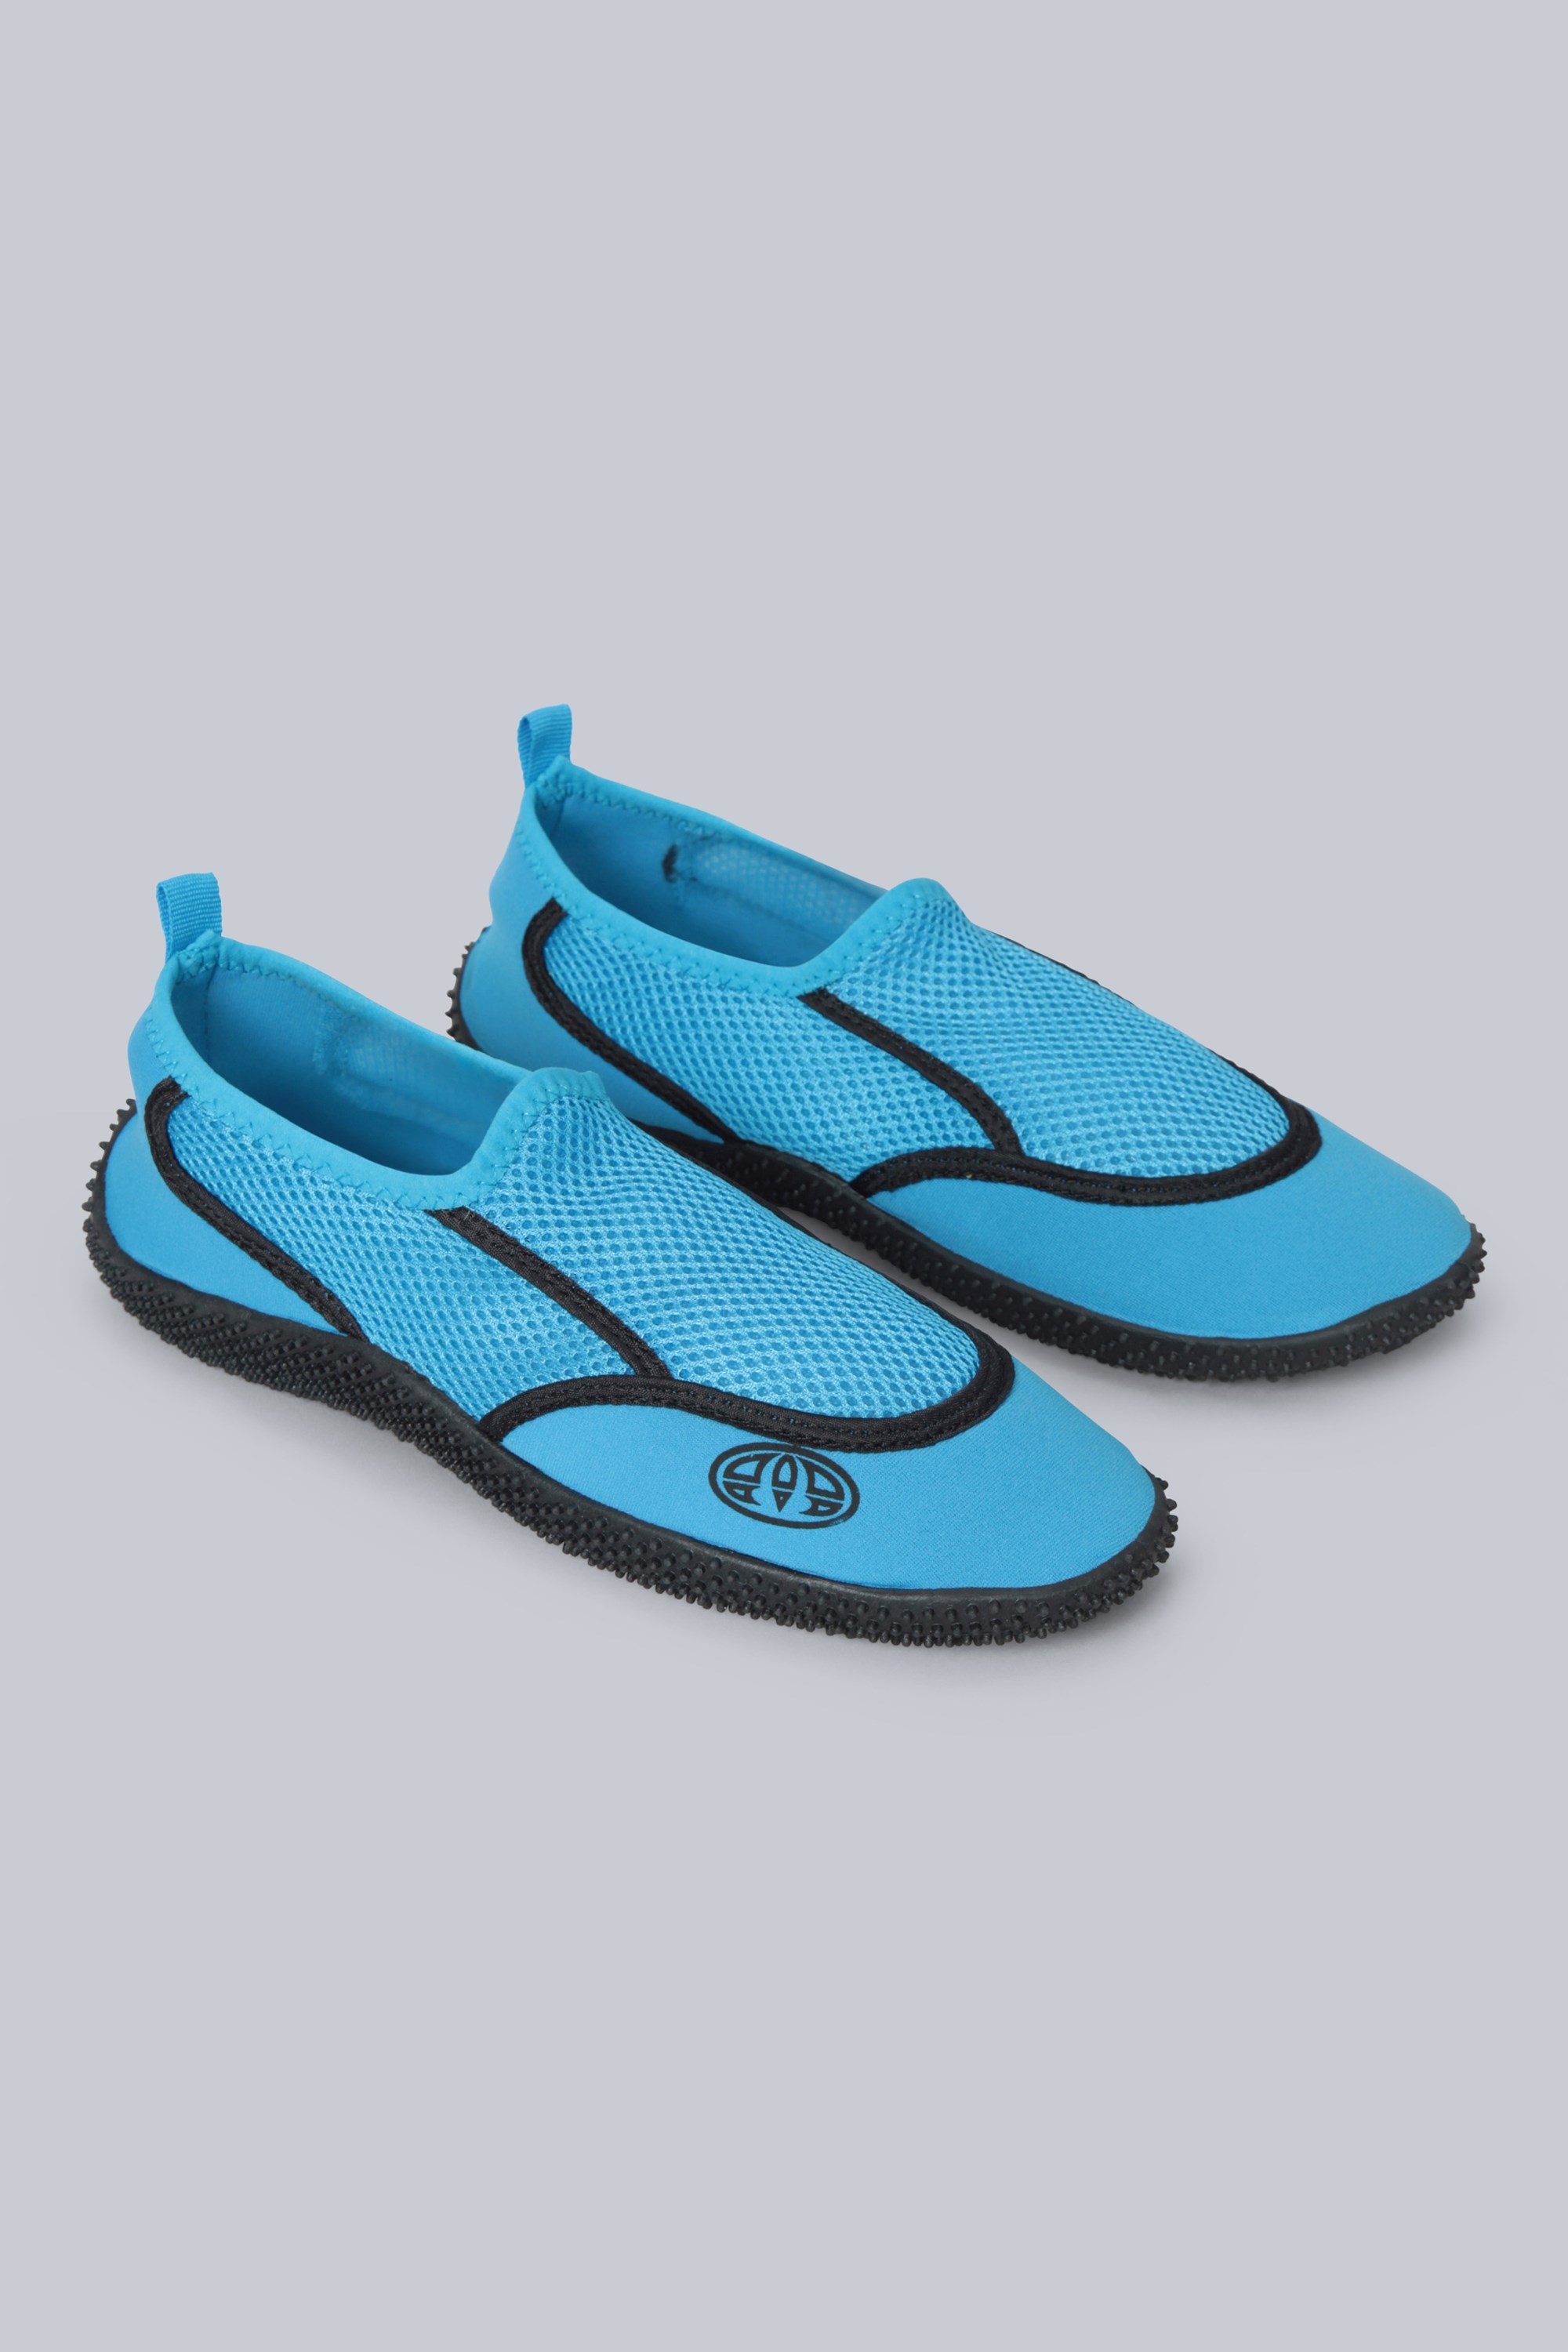 9 and 10 mens BNWT Aquashoe Adult Beach Shoes Ocean Silver Sizes UK 8 